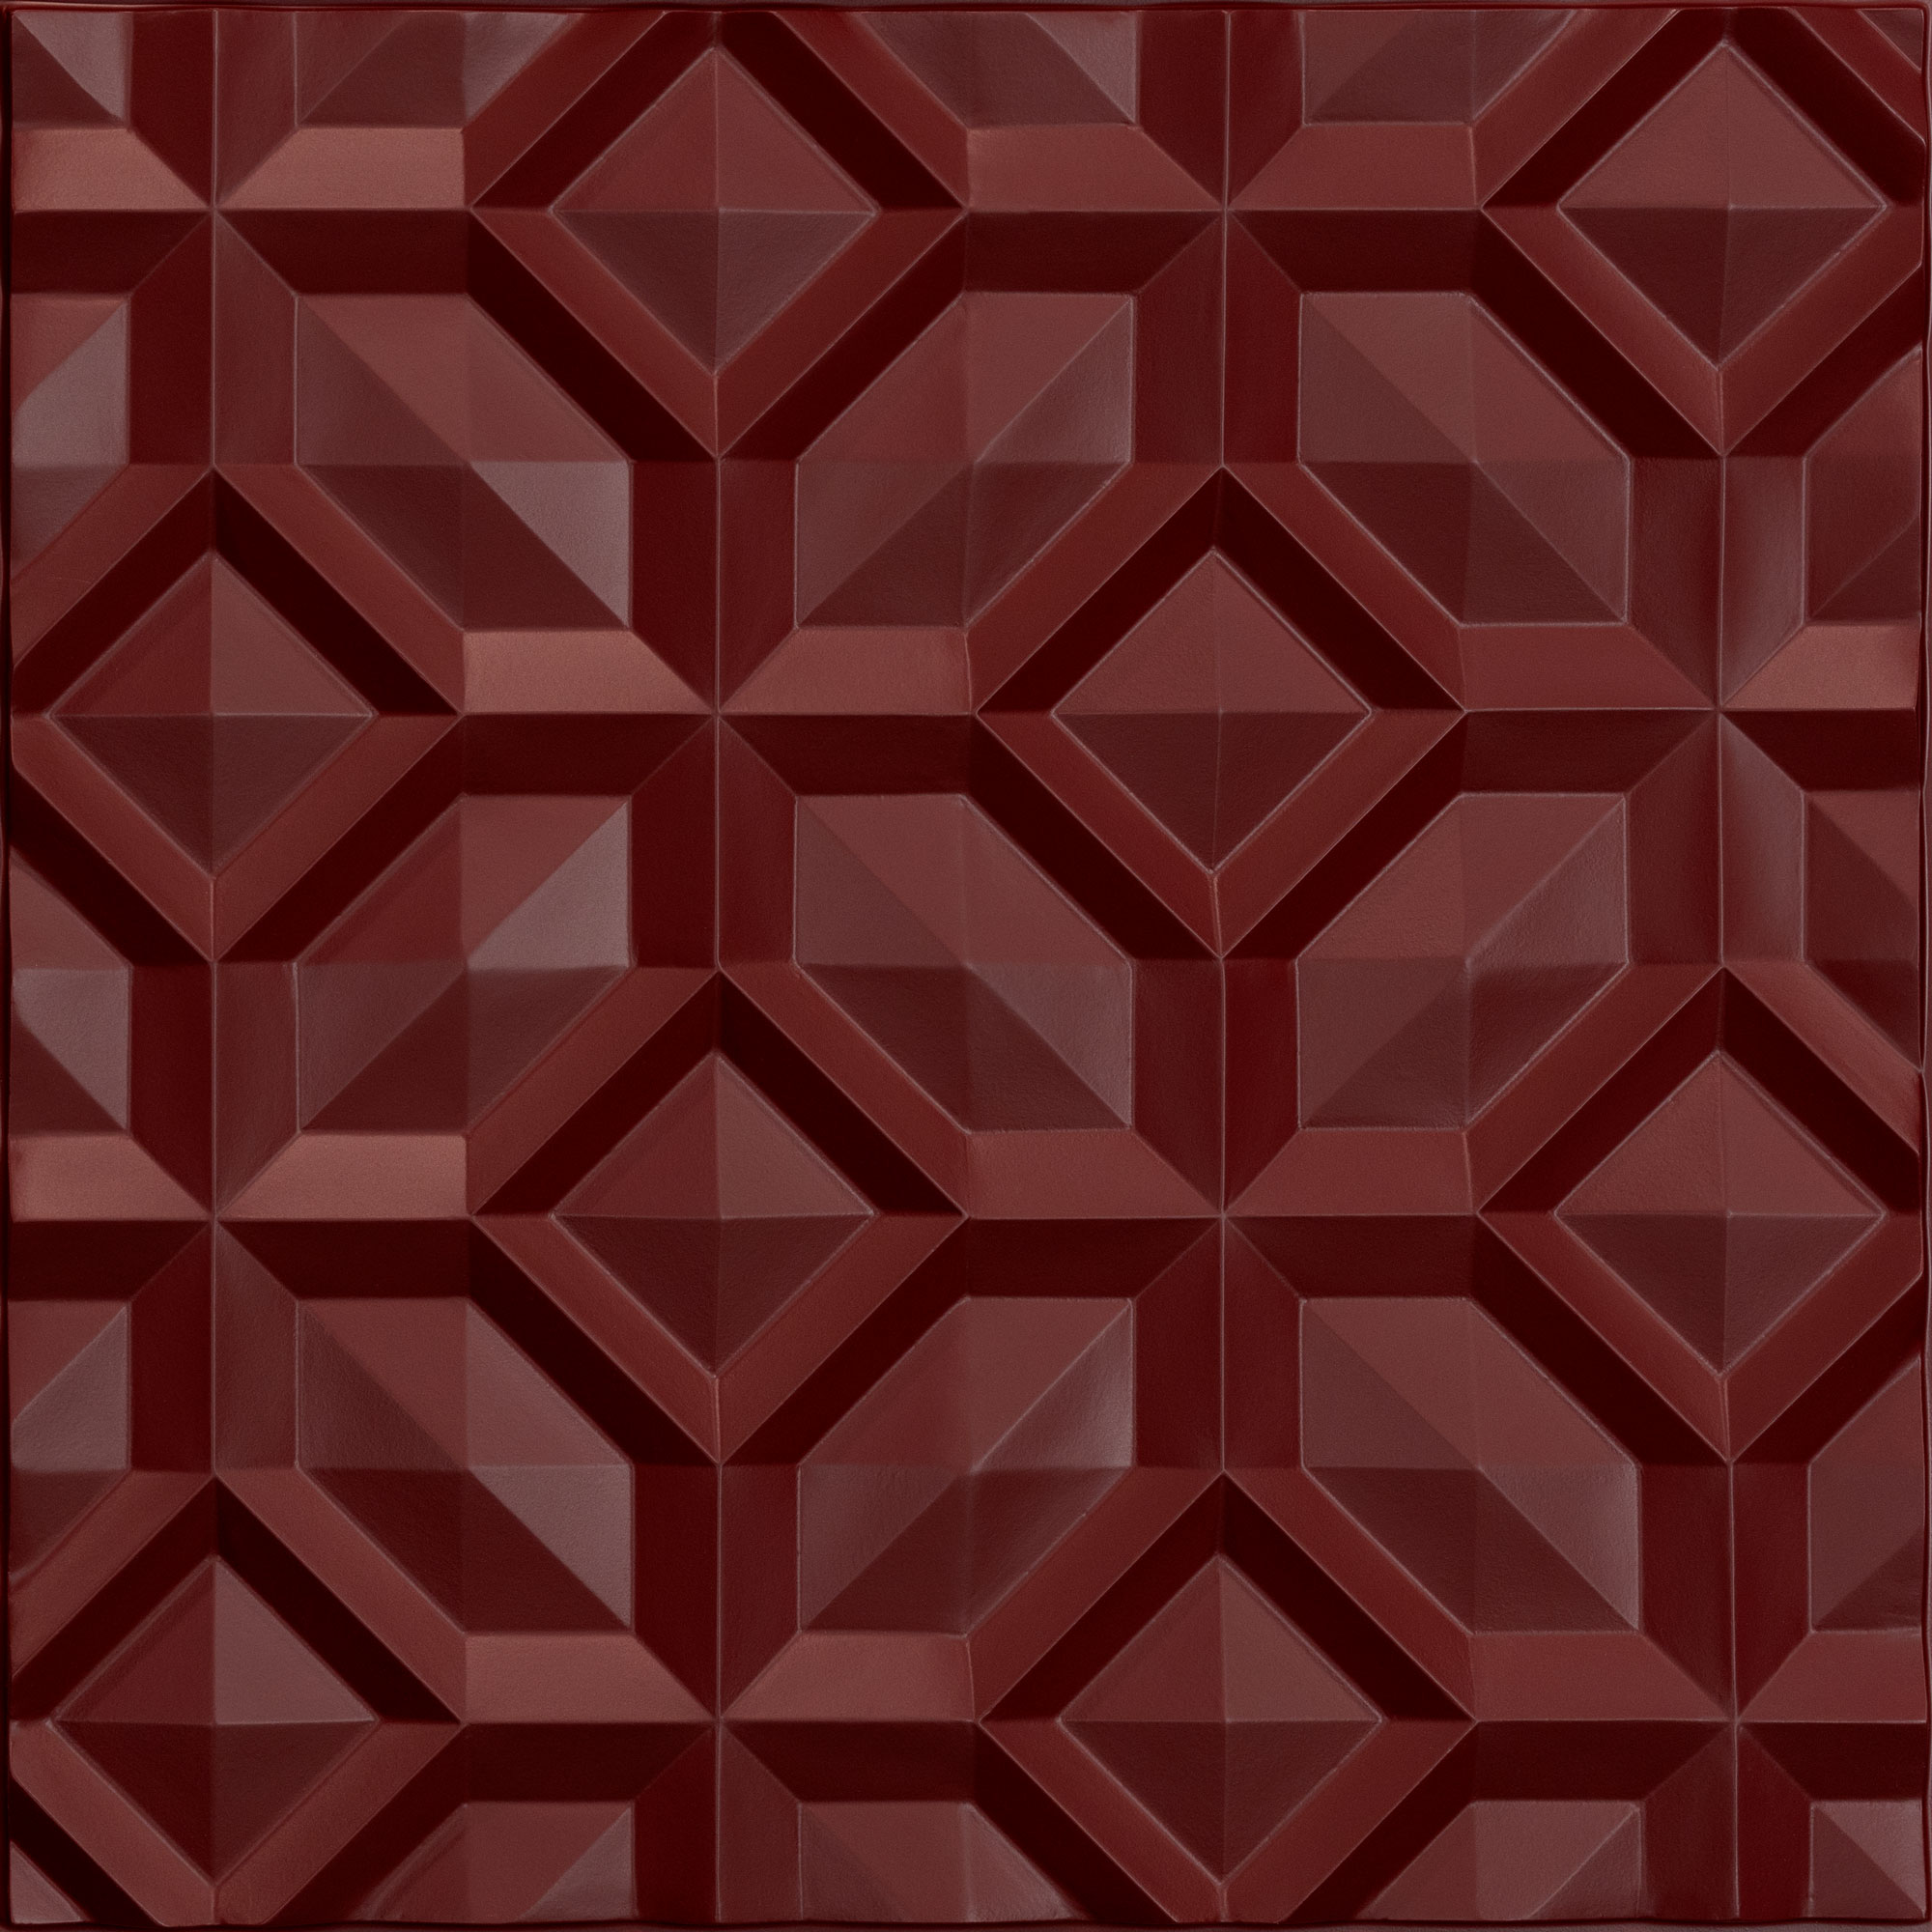 Doric Ceiling Tiles